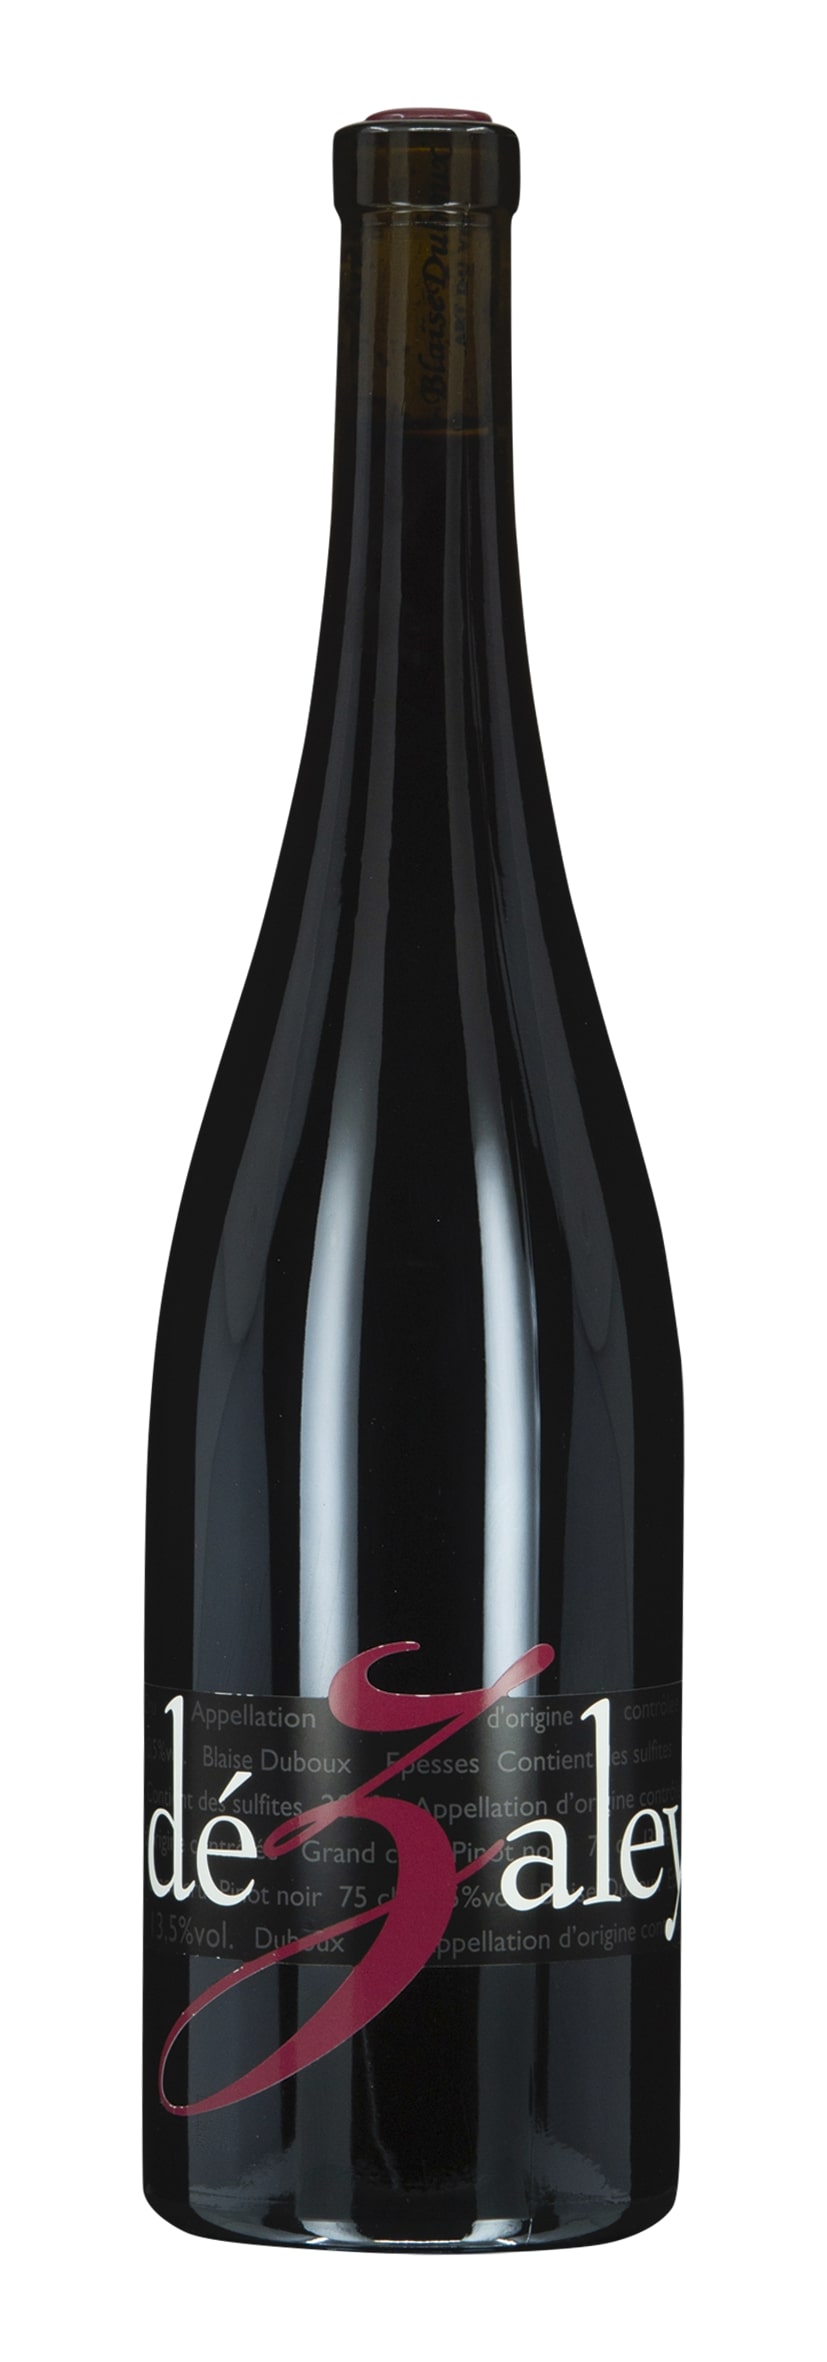 Dézaley Grand Cru AOC Pinot Noir 2020